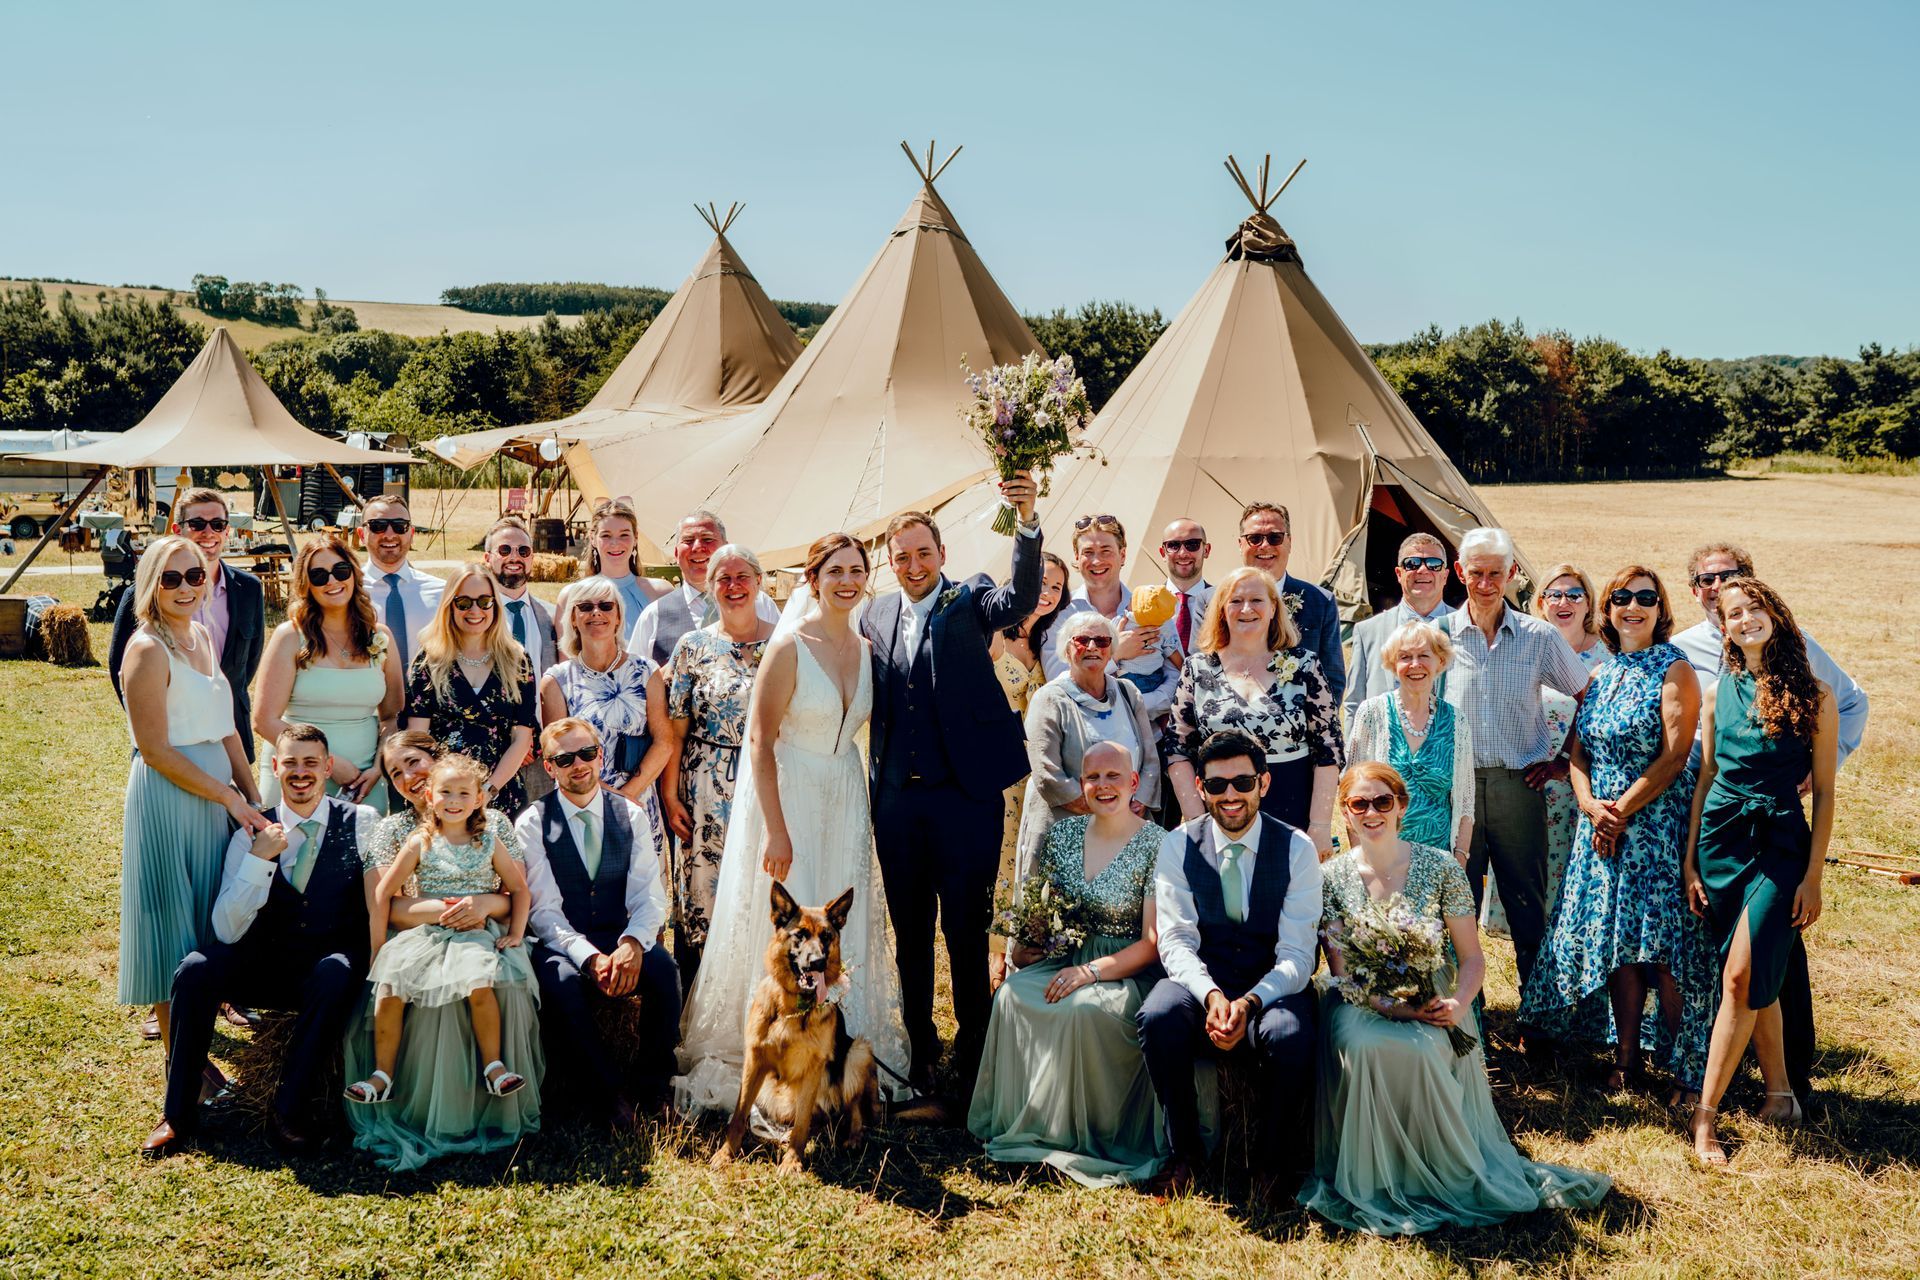 Fabulous Fun and Games: Kerry & David's Westfield Farm Wedding